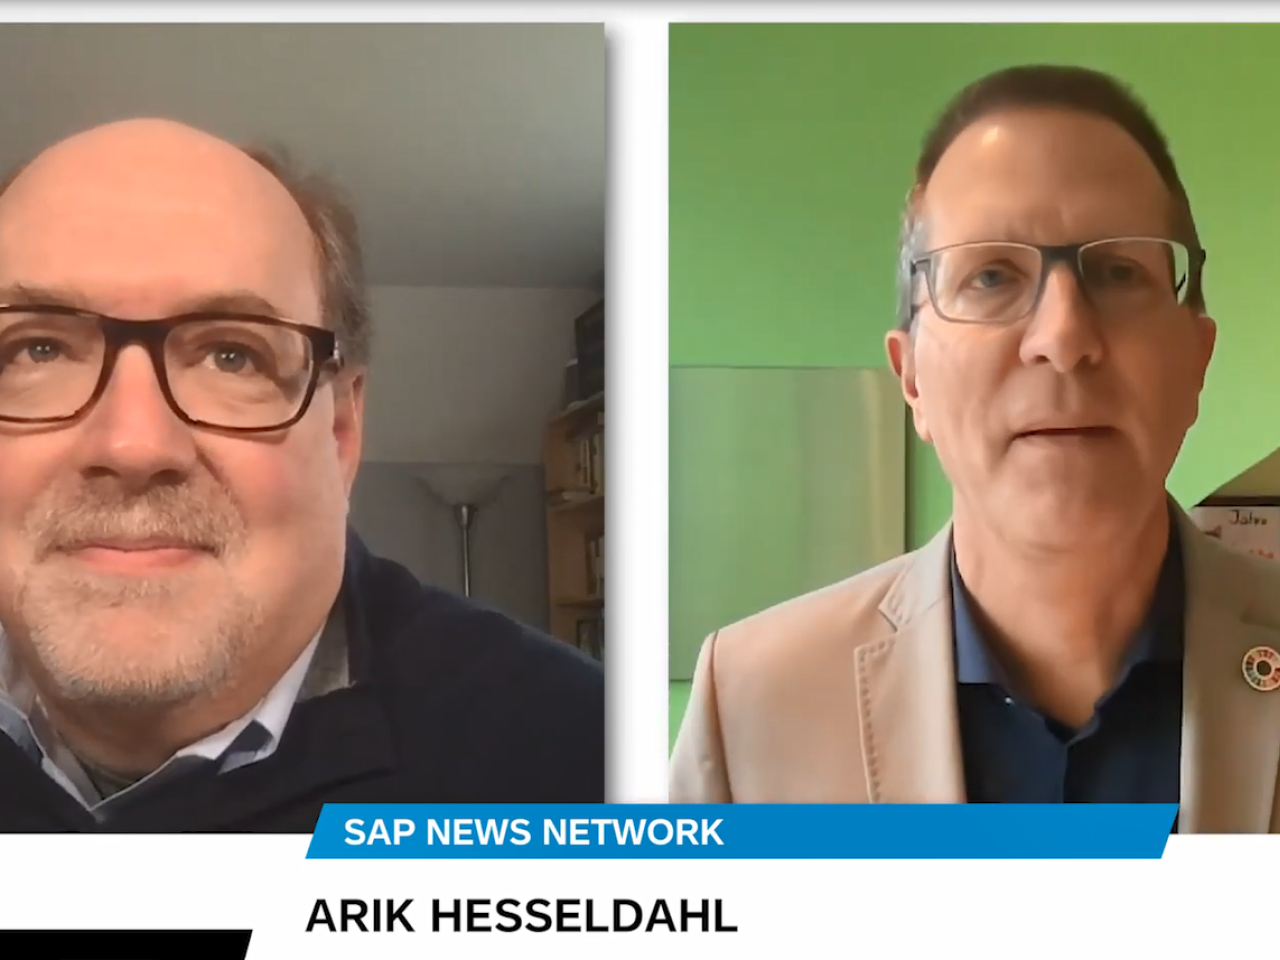 Split screen of two people, Arik Hesseldahl on the right, talking in a virtual meeting.